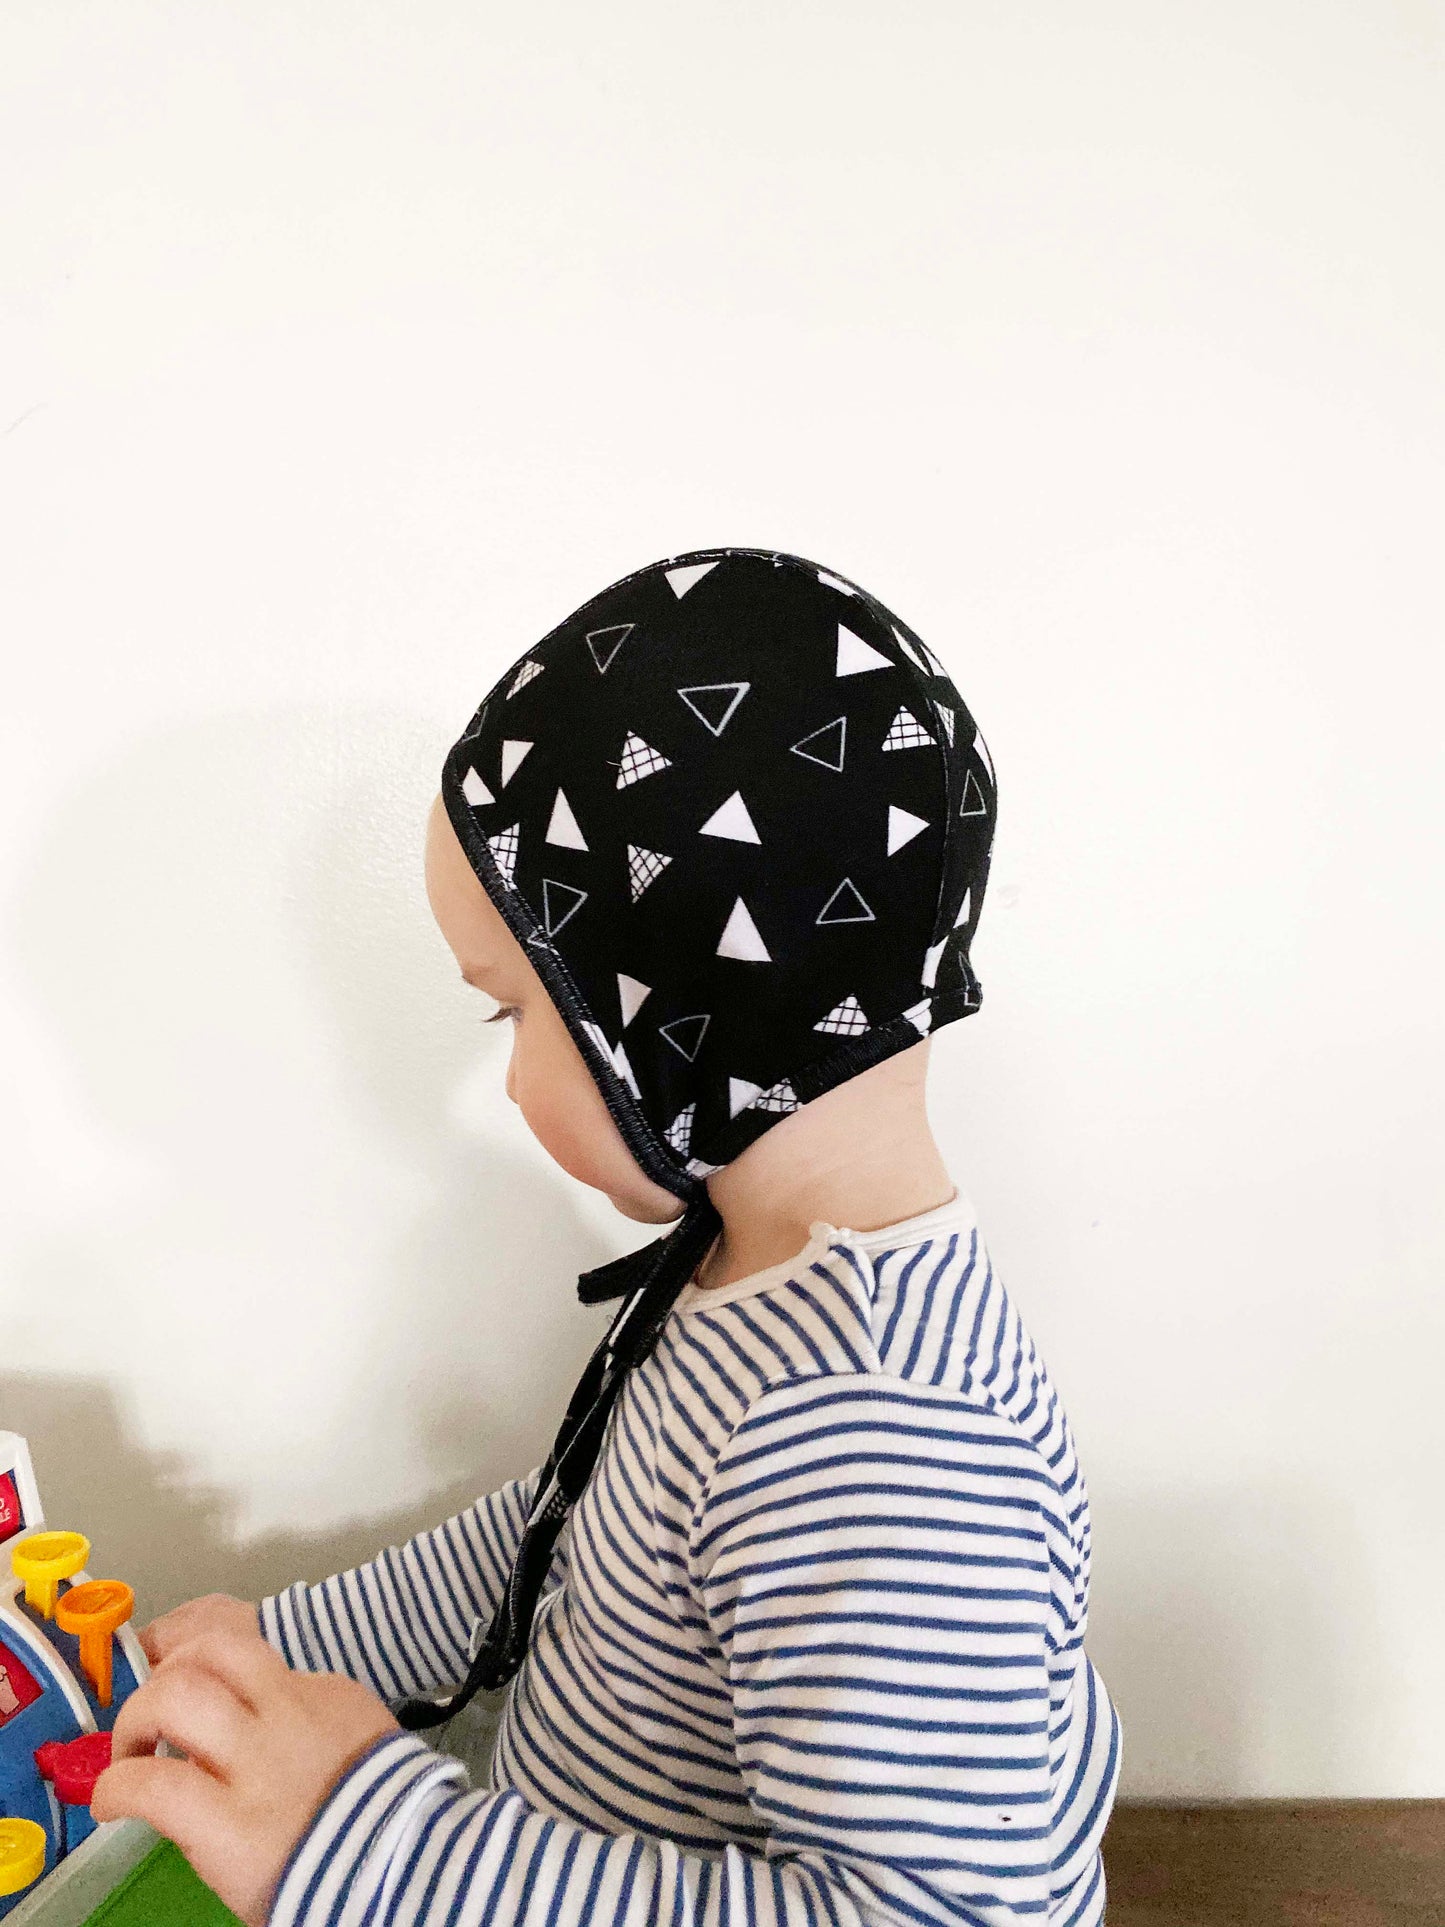 Baby Pilot Hat Sewing Pattern